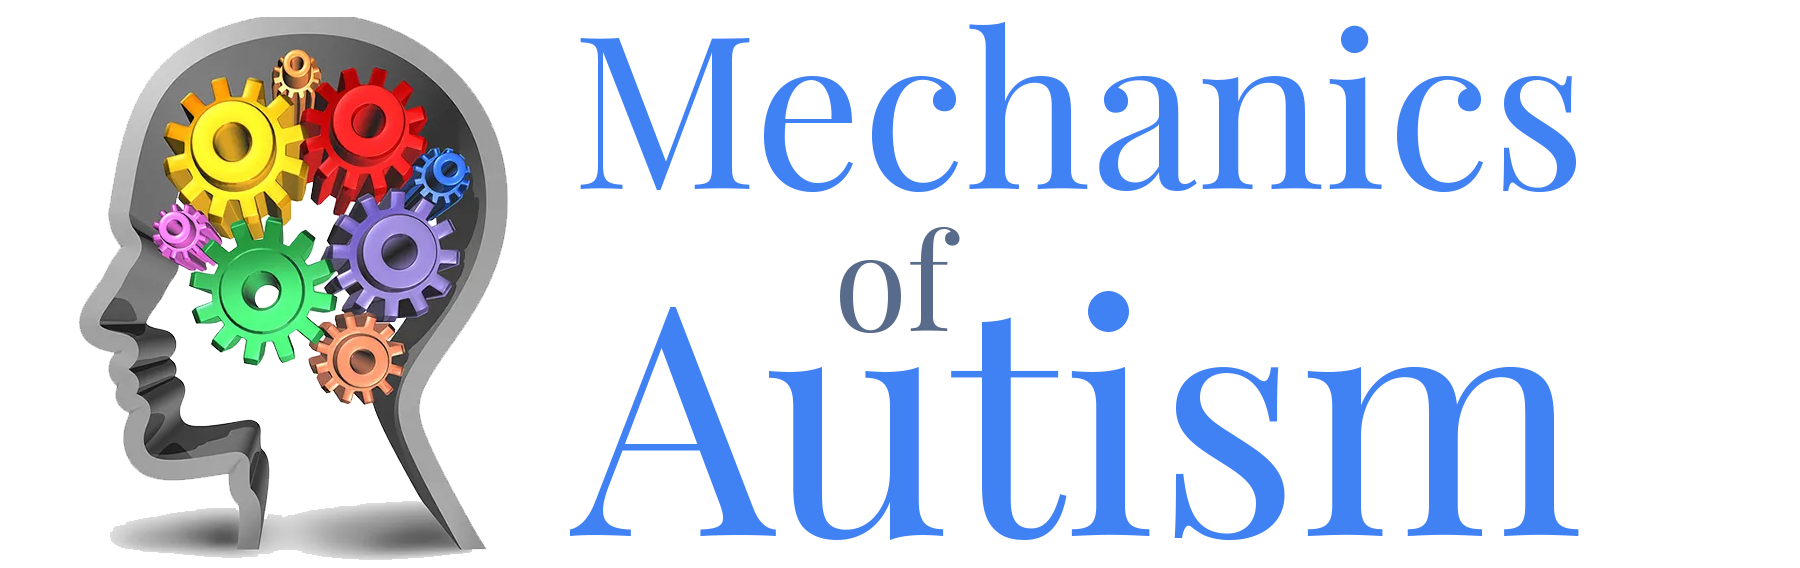 Mechanics of Autism